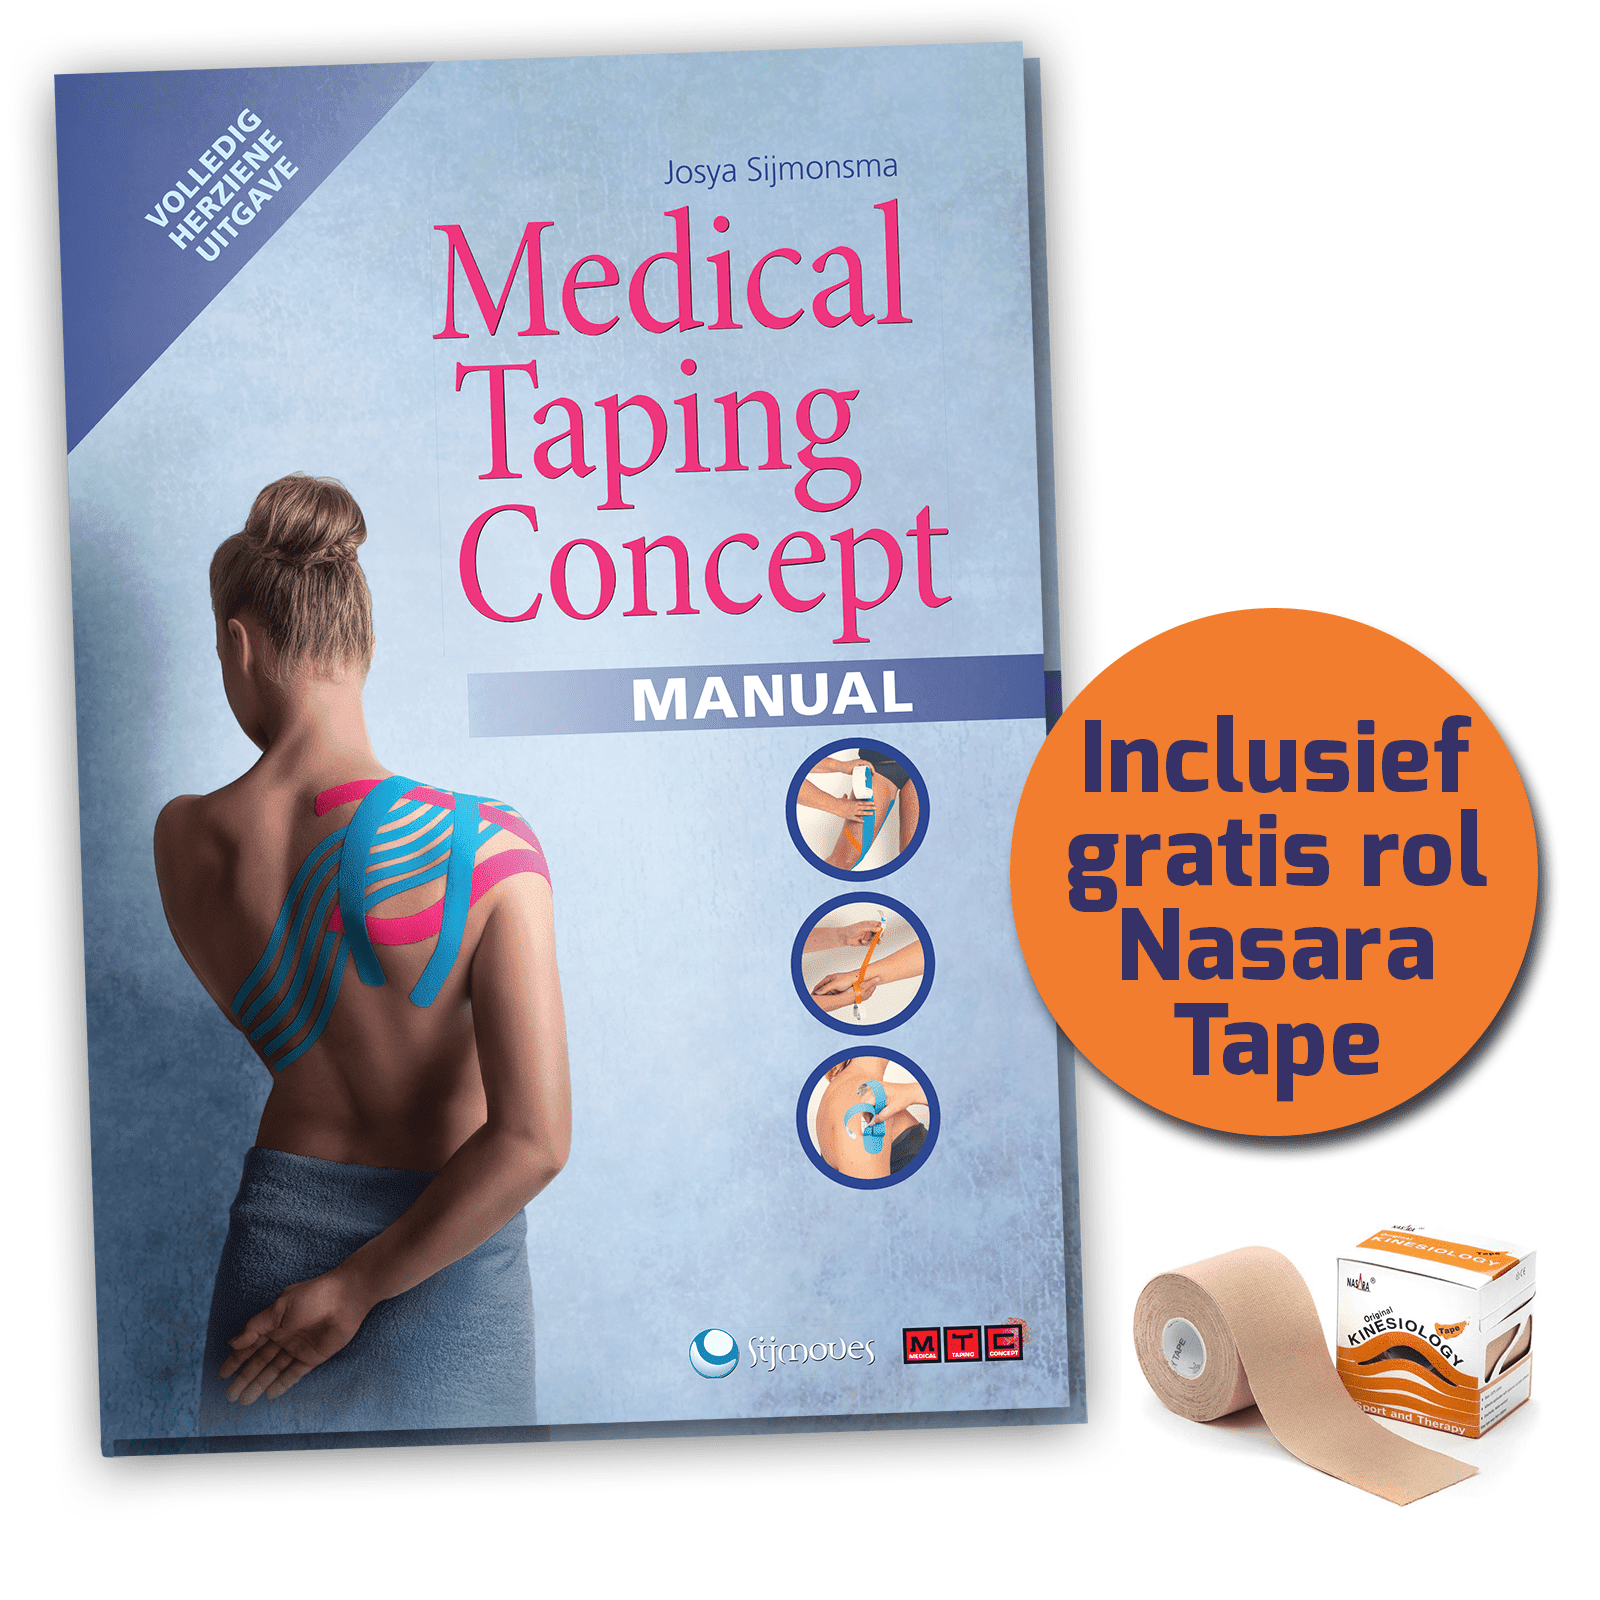 Medical Taping Concept boek - Josya Sijmonsma